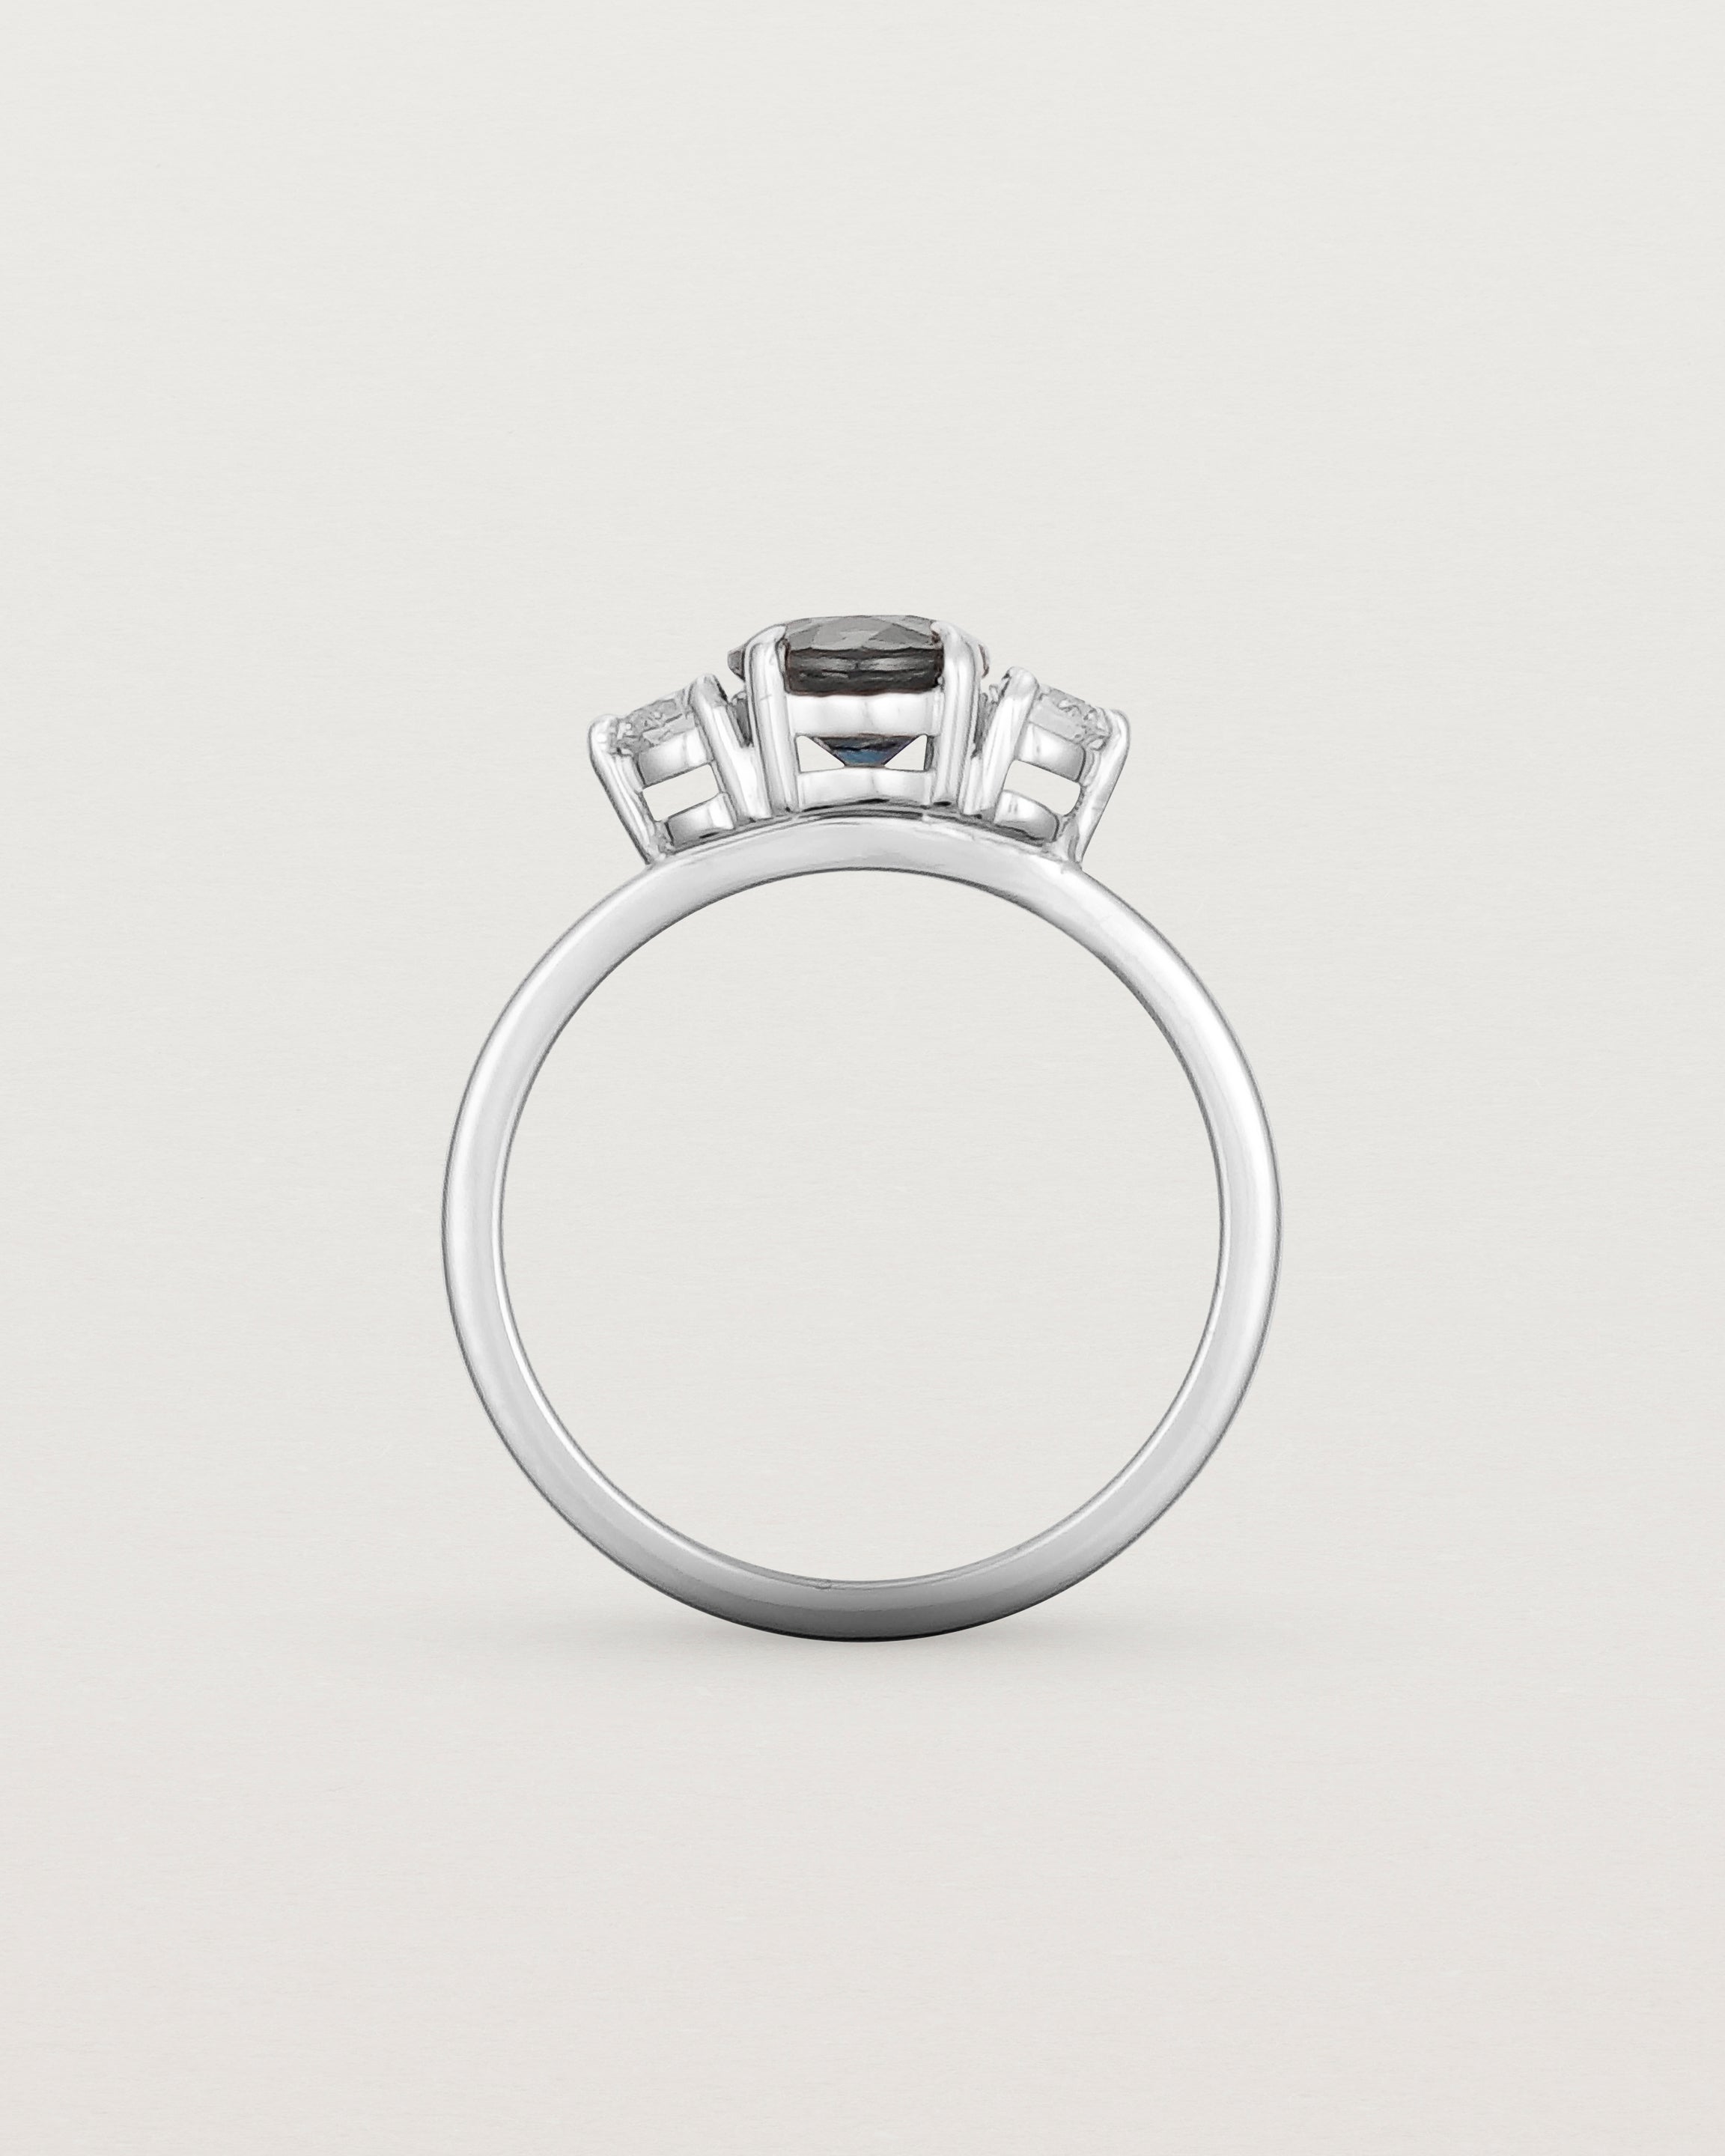 Standing view of the Petite Una Round Trio Ring | Australian Sapphire & Diamonds | White Gold.